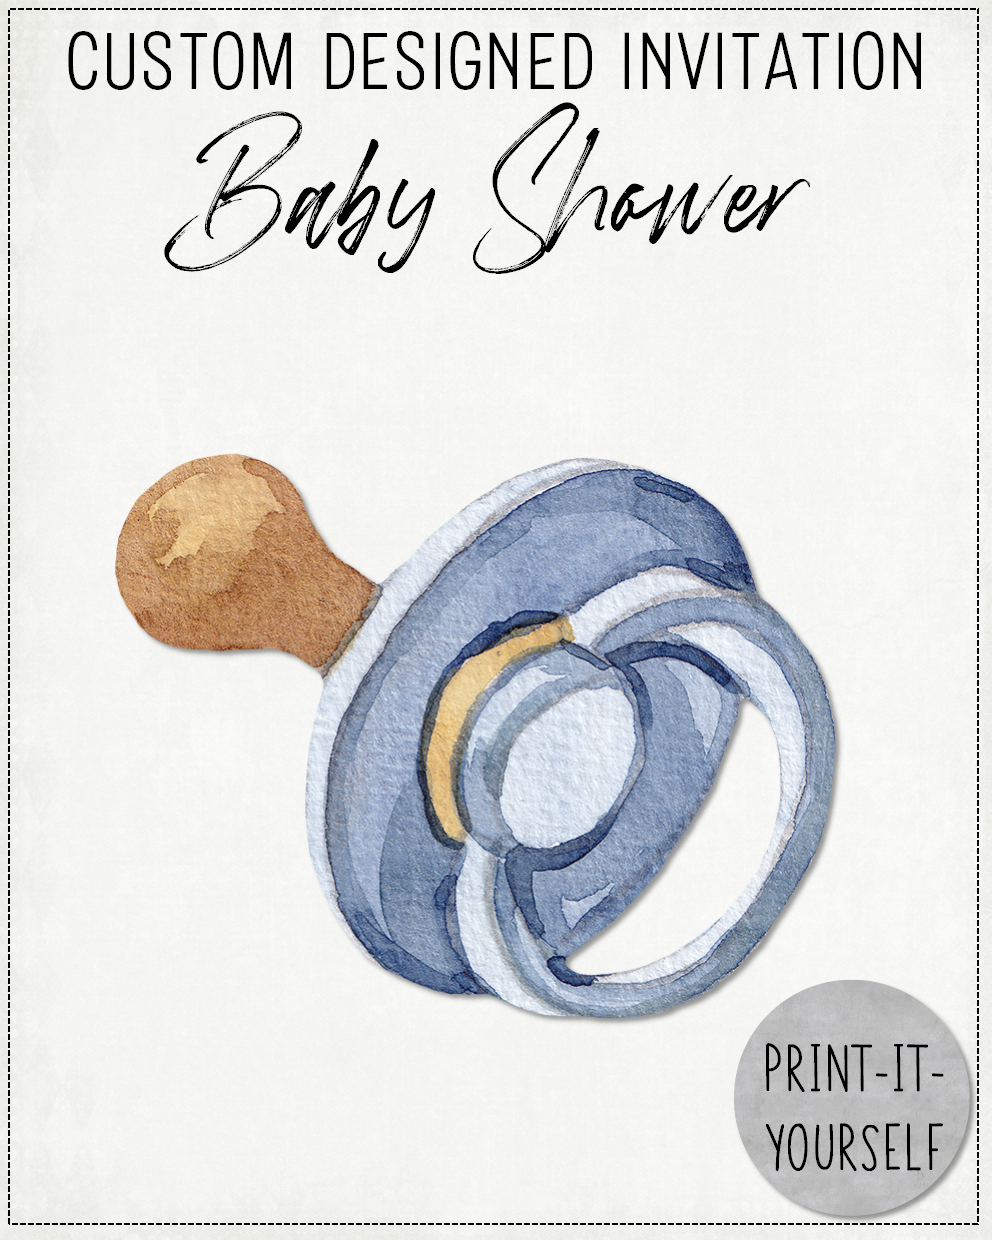 CUSTOM DESIGNED INVITATION - Baby Shower